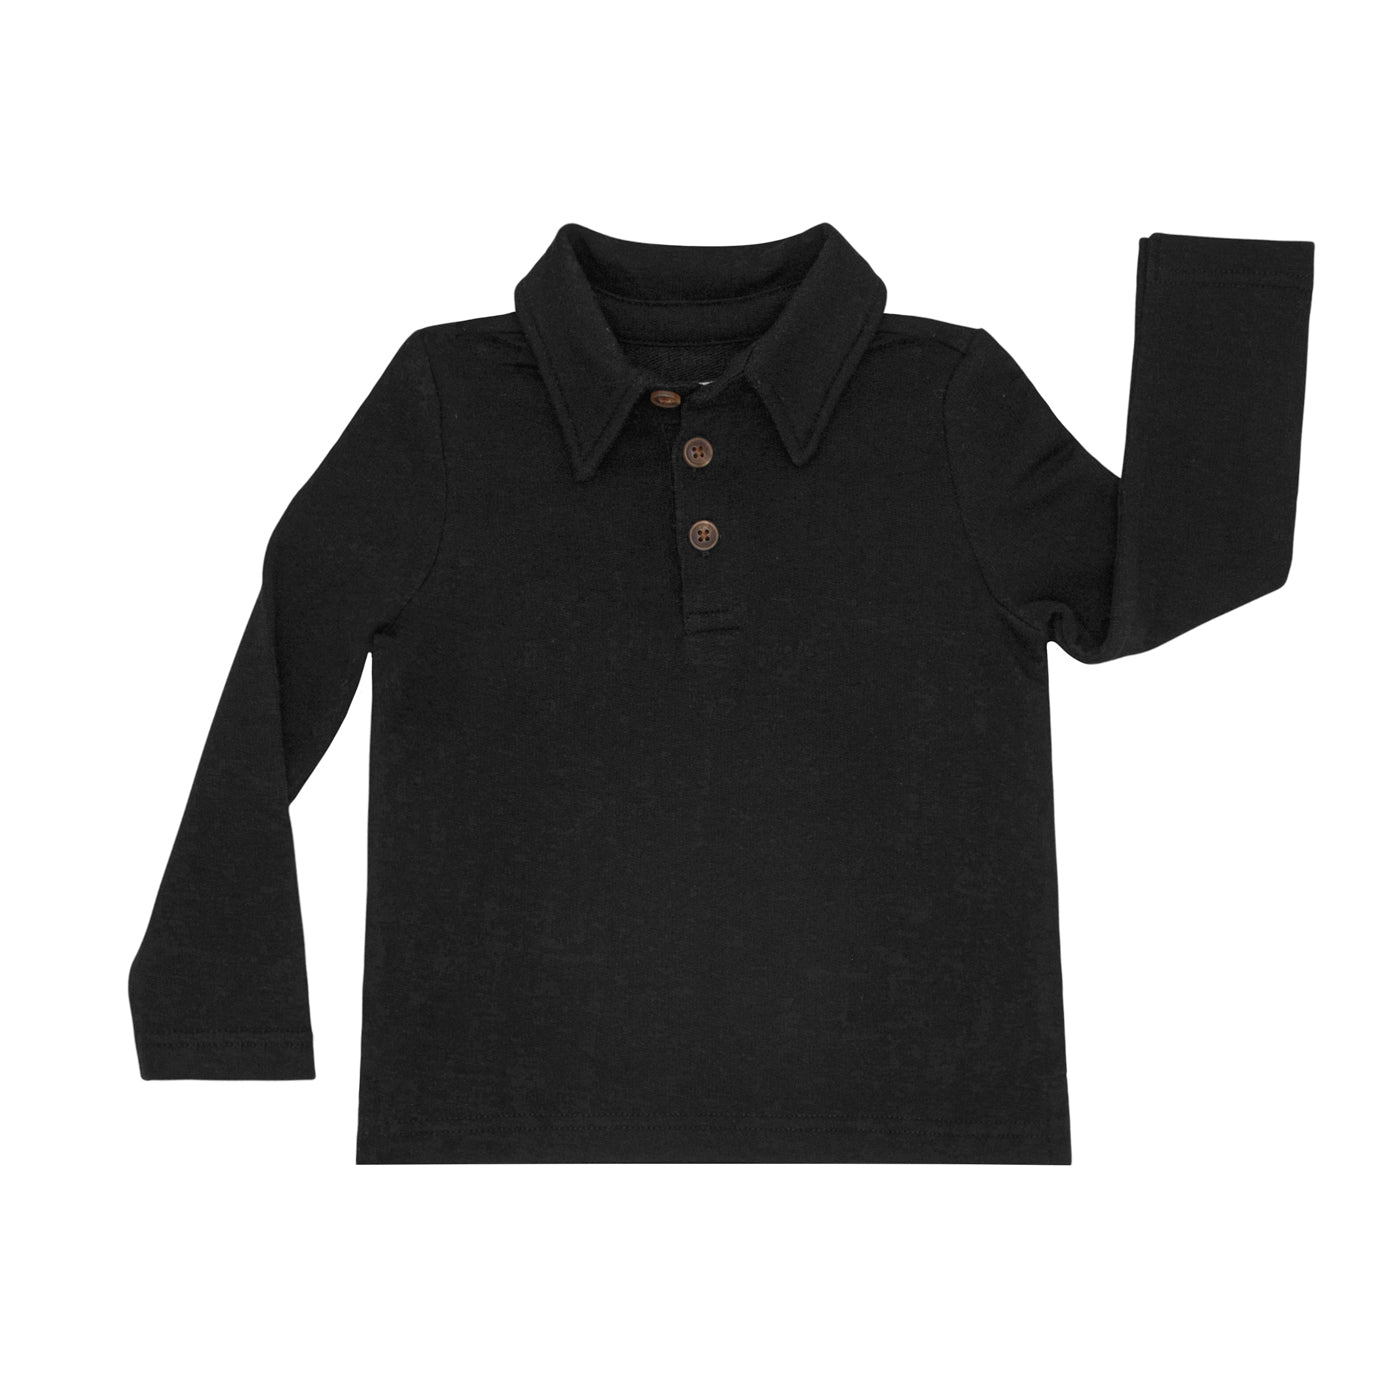 Flat lay image of a Black polo shirt